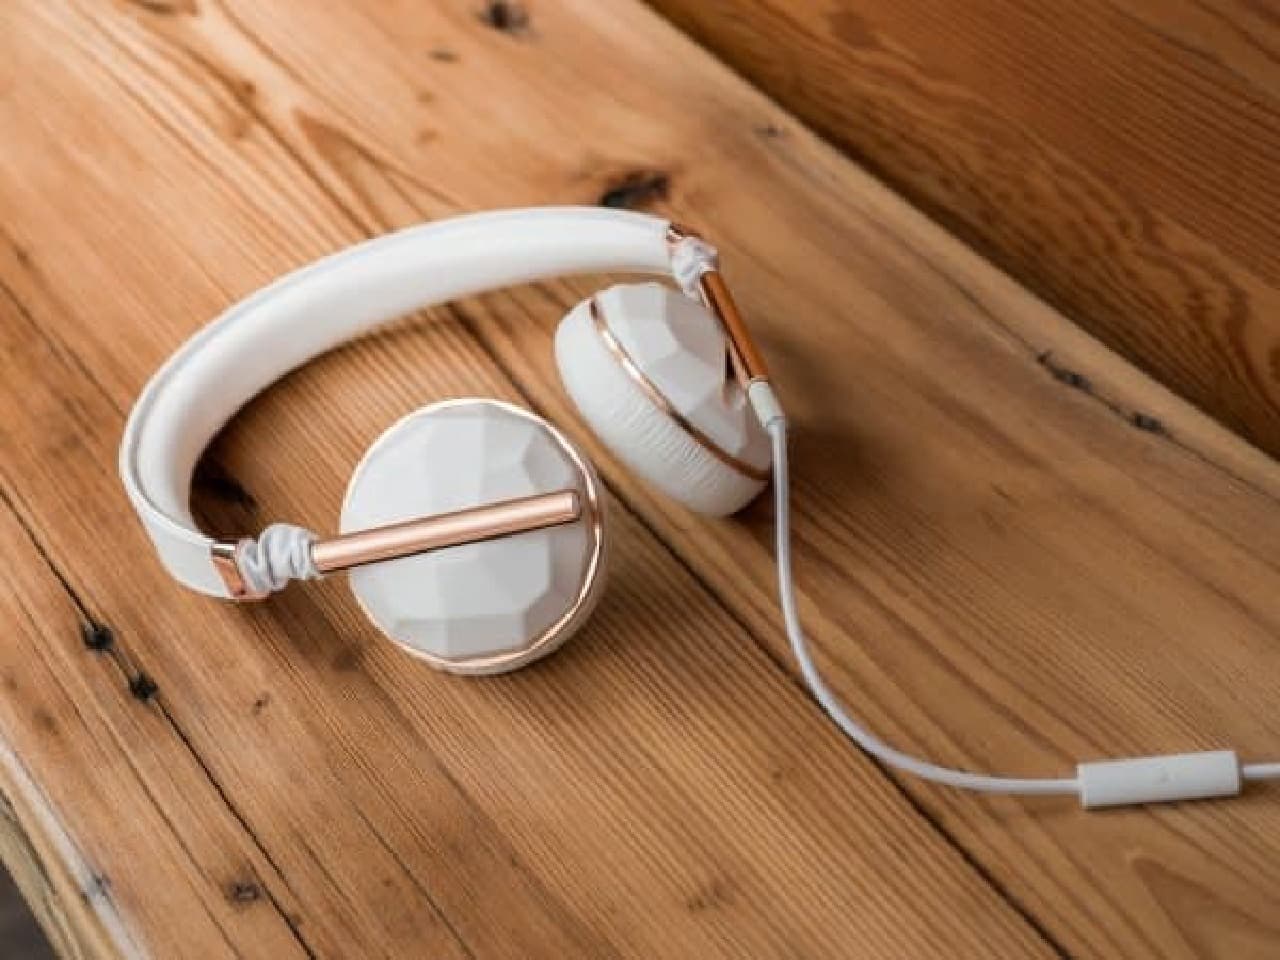 Compact headphones tailored to women's ears